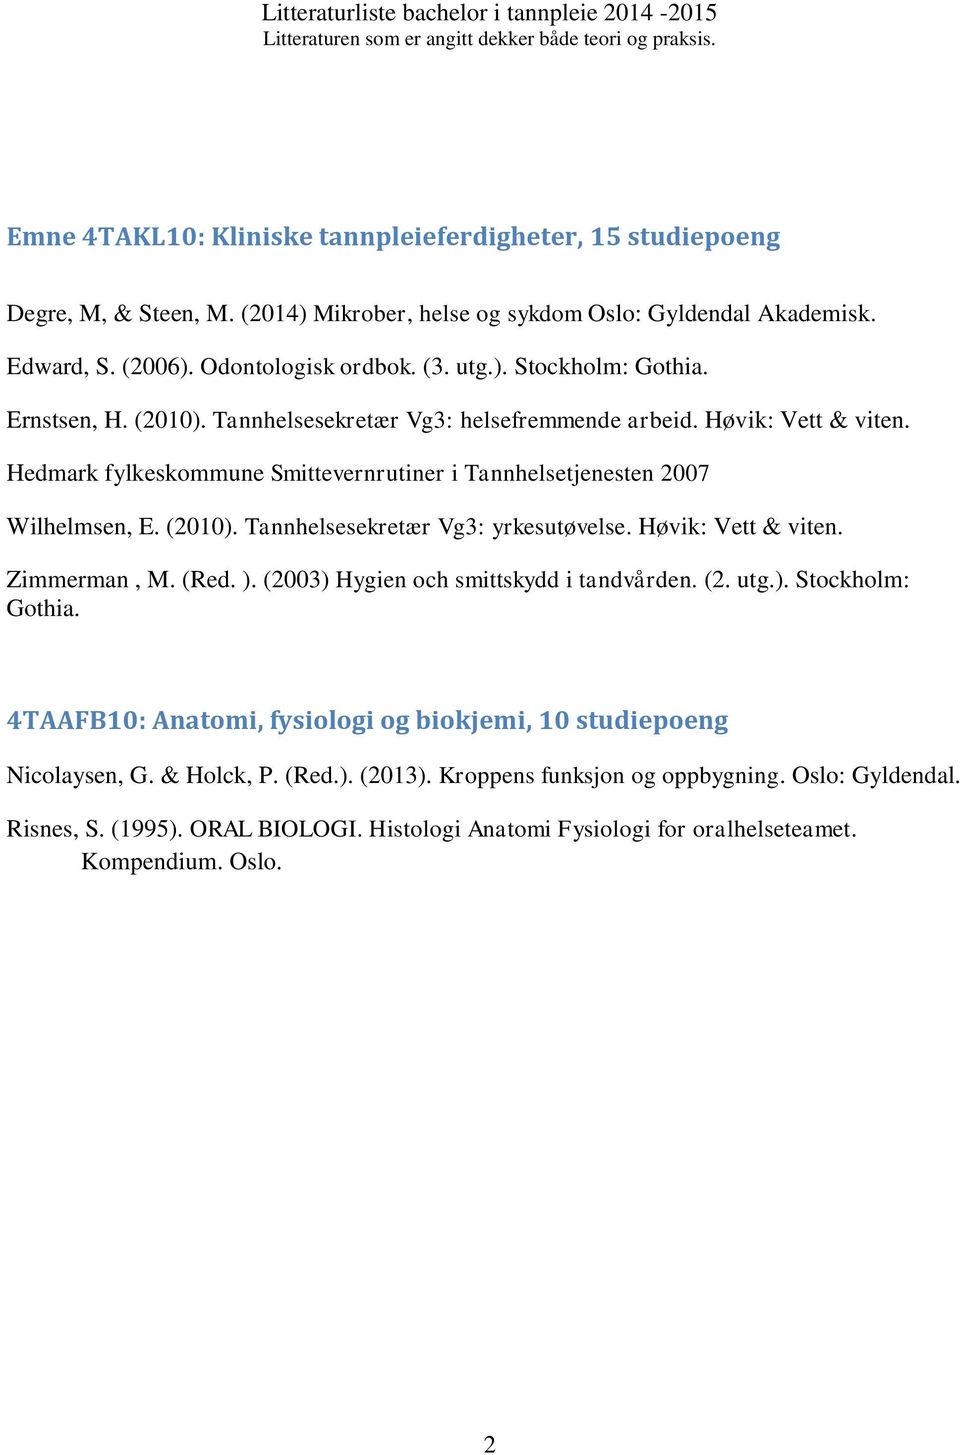 Høvik: Vett & viten. Zimmerman, M. (Red. ). (2003) Hygien och smittskydd i tandvården. (2. utg.). Stockholm: Gothia. 4TAAFB10: Anatomi, fysiologi og biokjemi, 10 studiepoeng Nicolaysen, G.